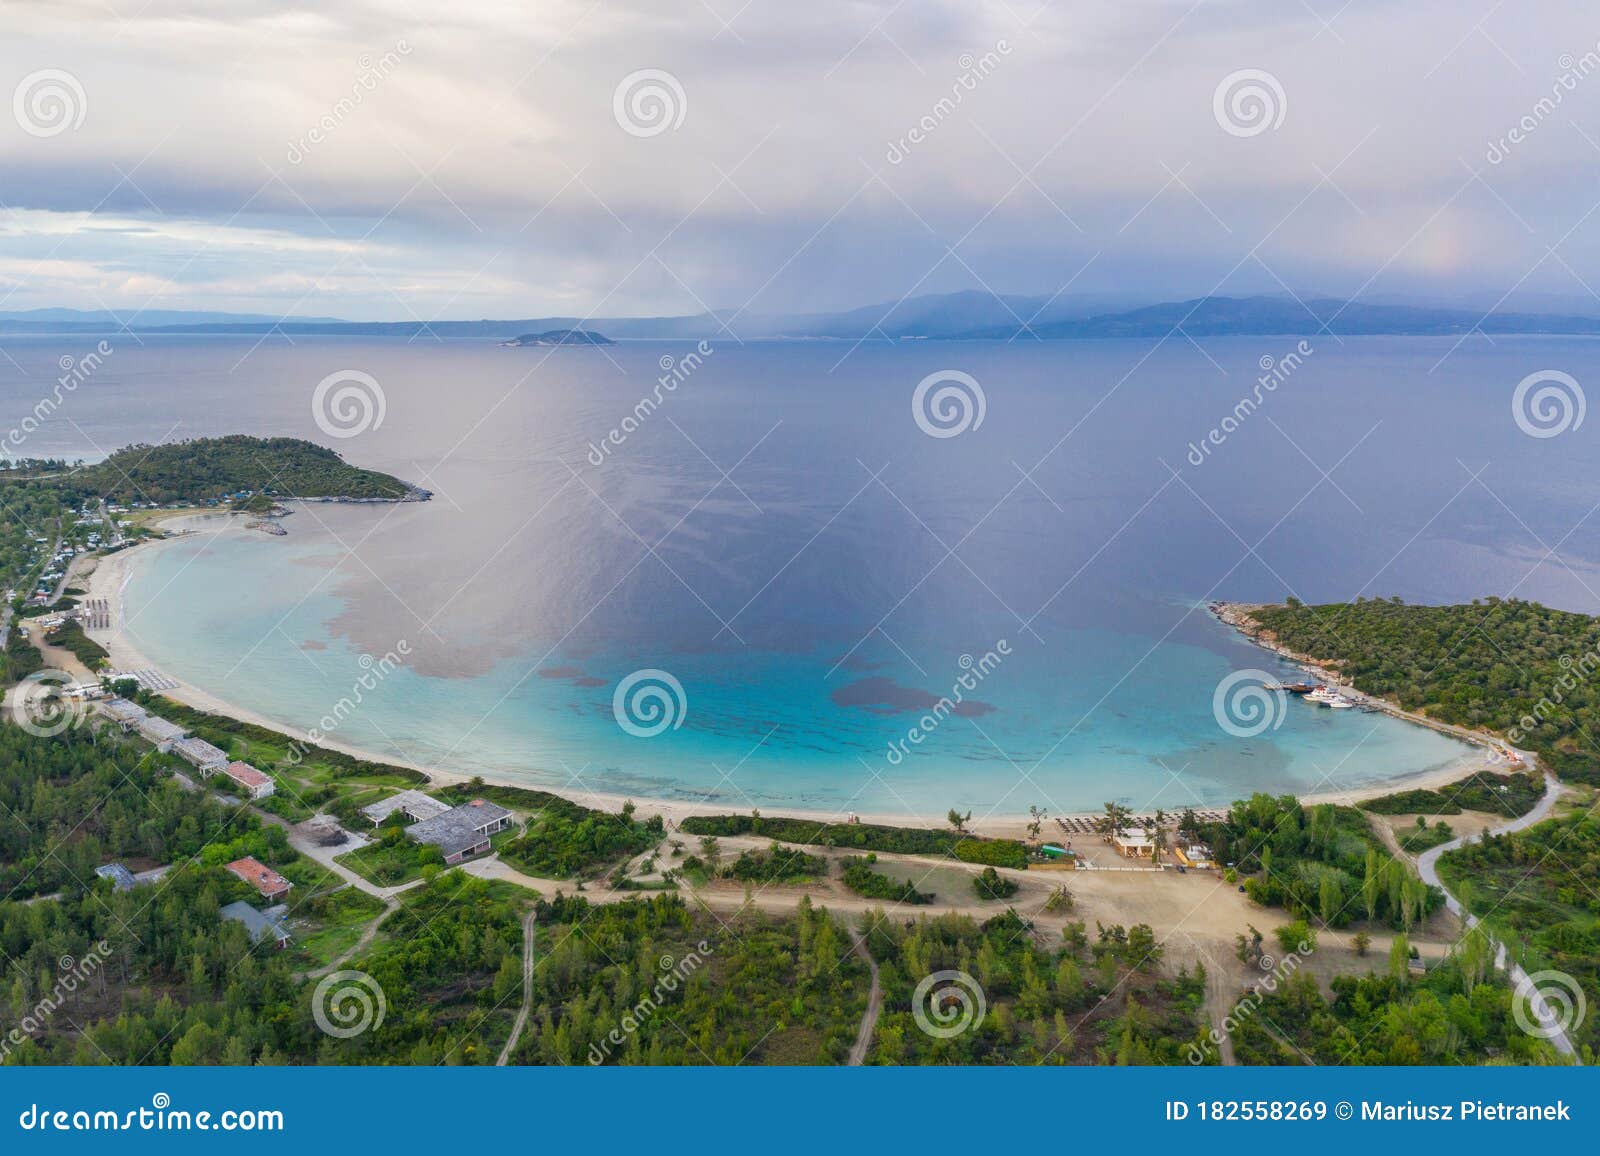 aerial drone view of paliouri beach in kassandra sithonia penisula chalkidiki greece